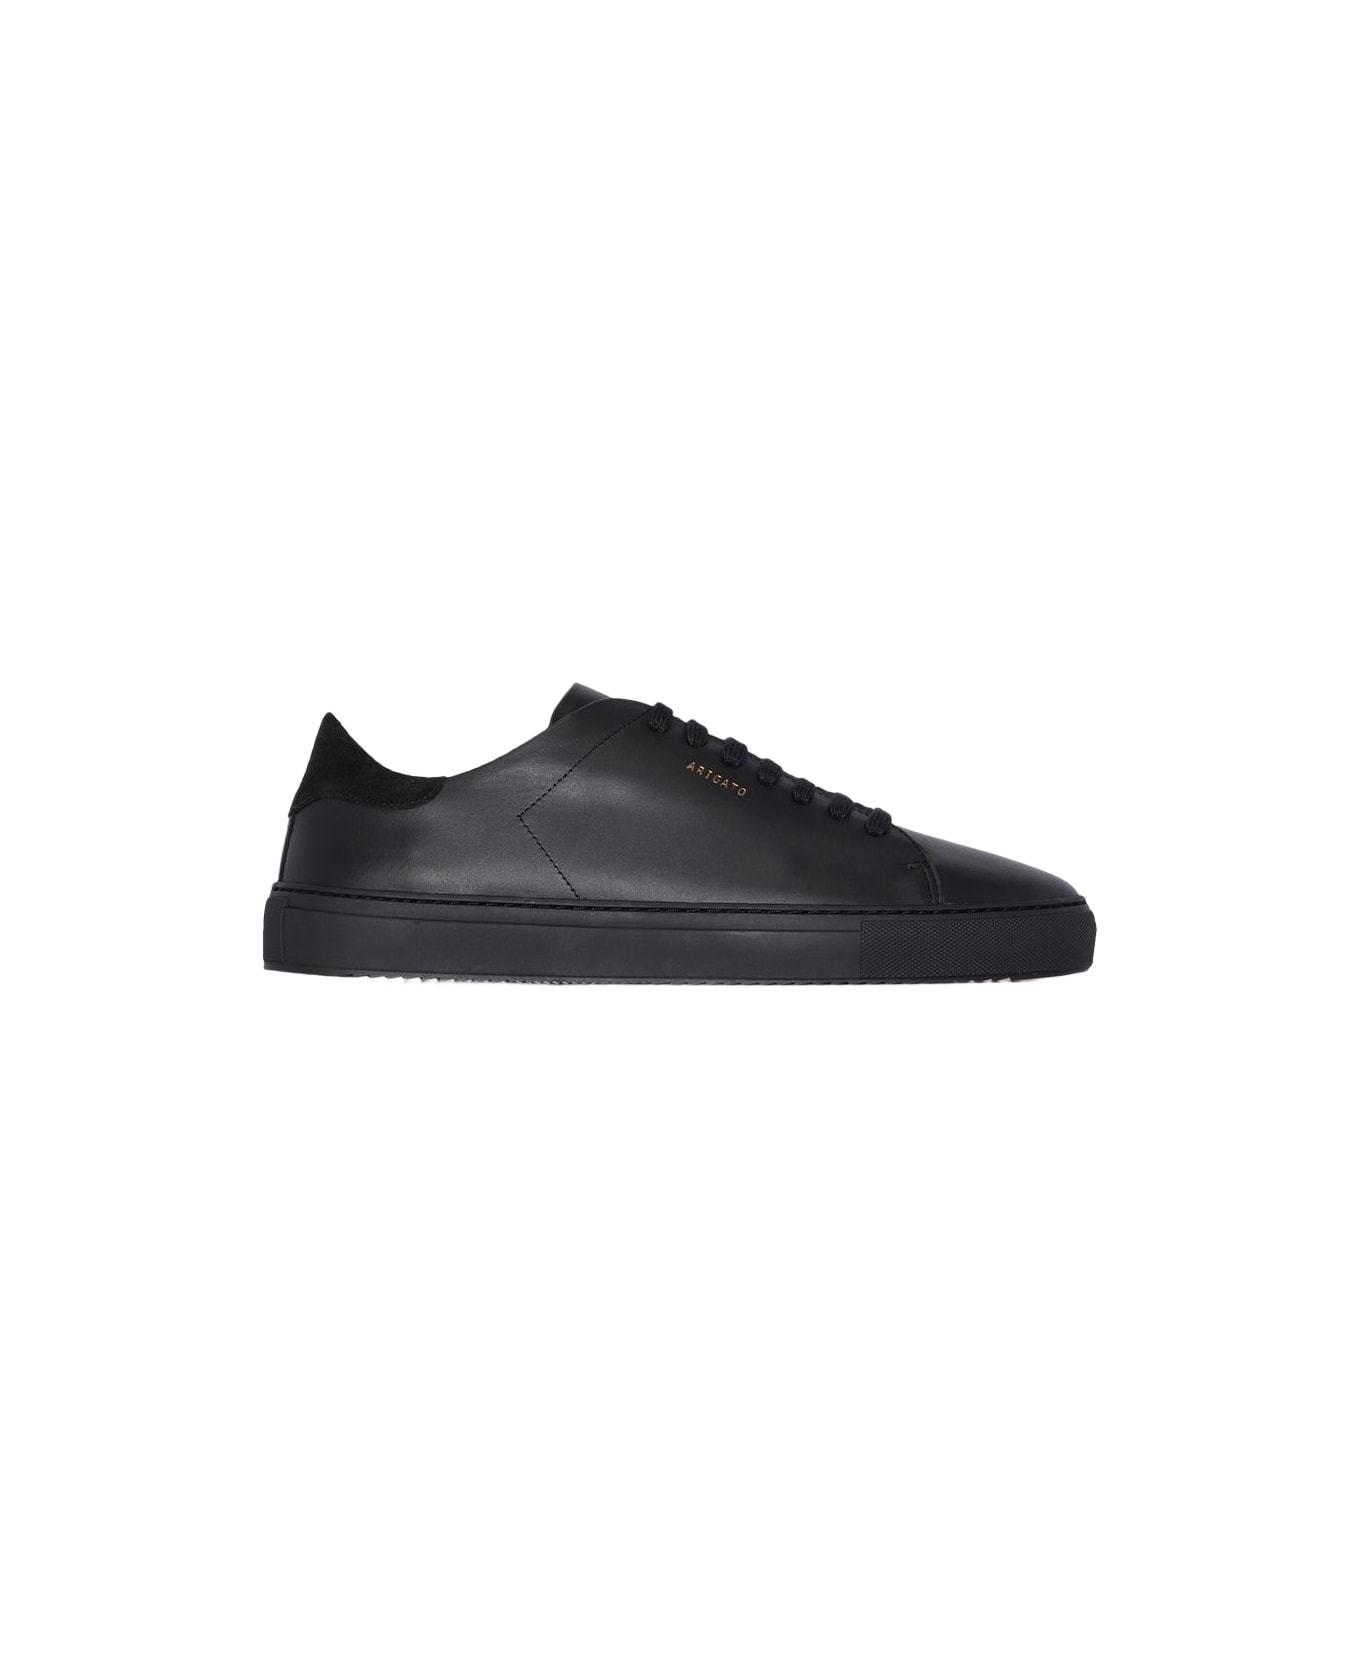 Axel Arigato Black Leather Sneakers - Black